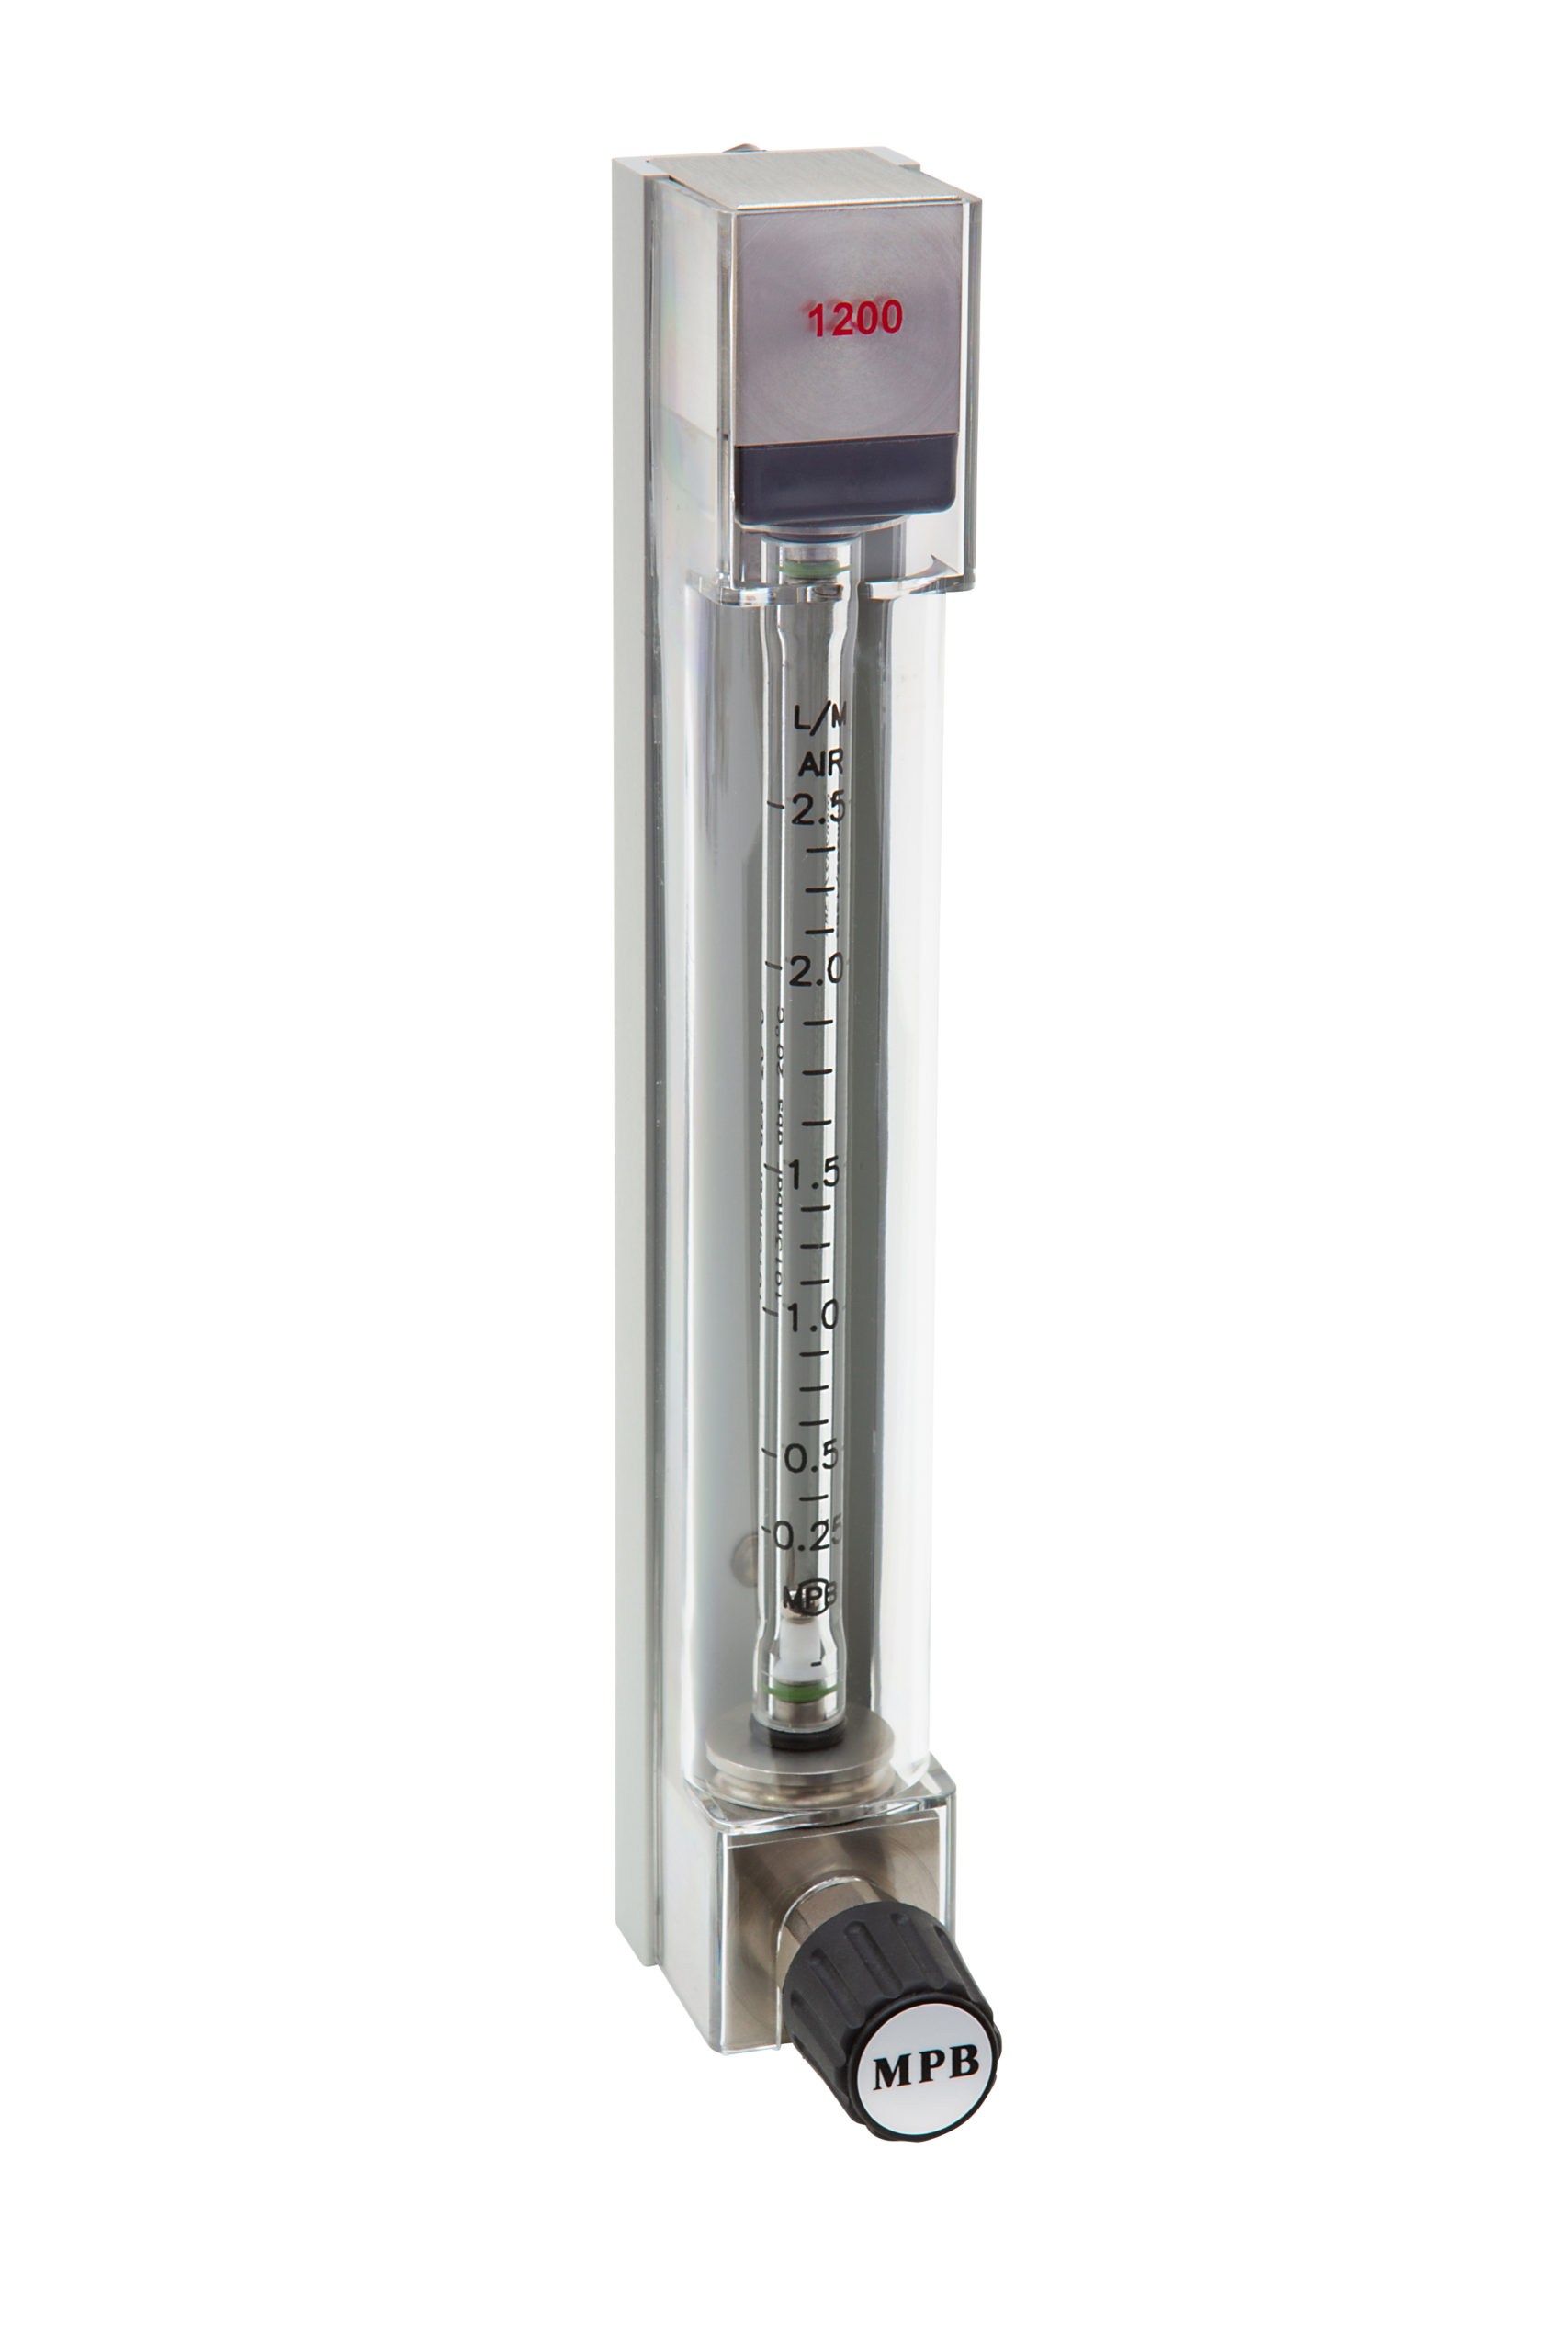 Flowmeter VA MPB Industries Series 1200 Standard N2O Variable Area 